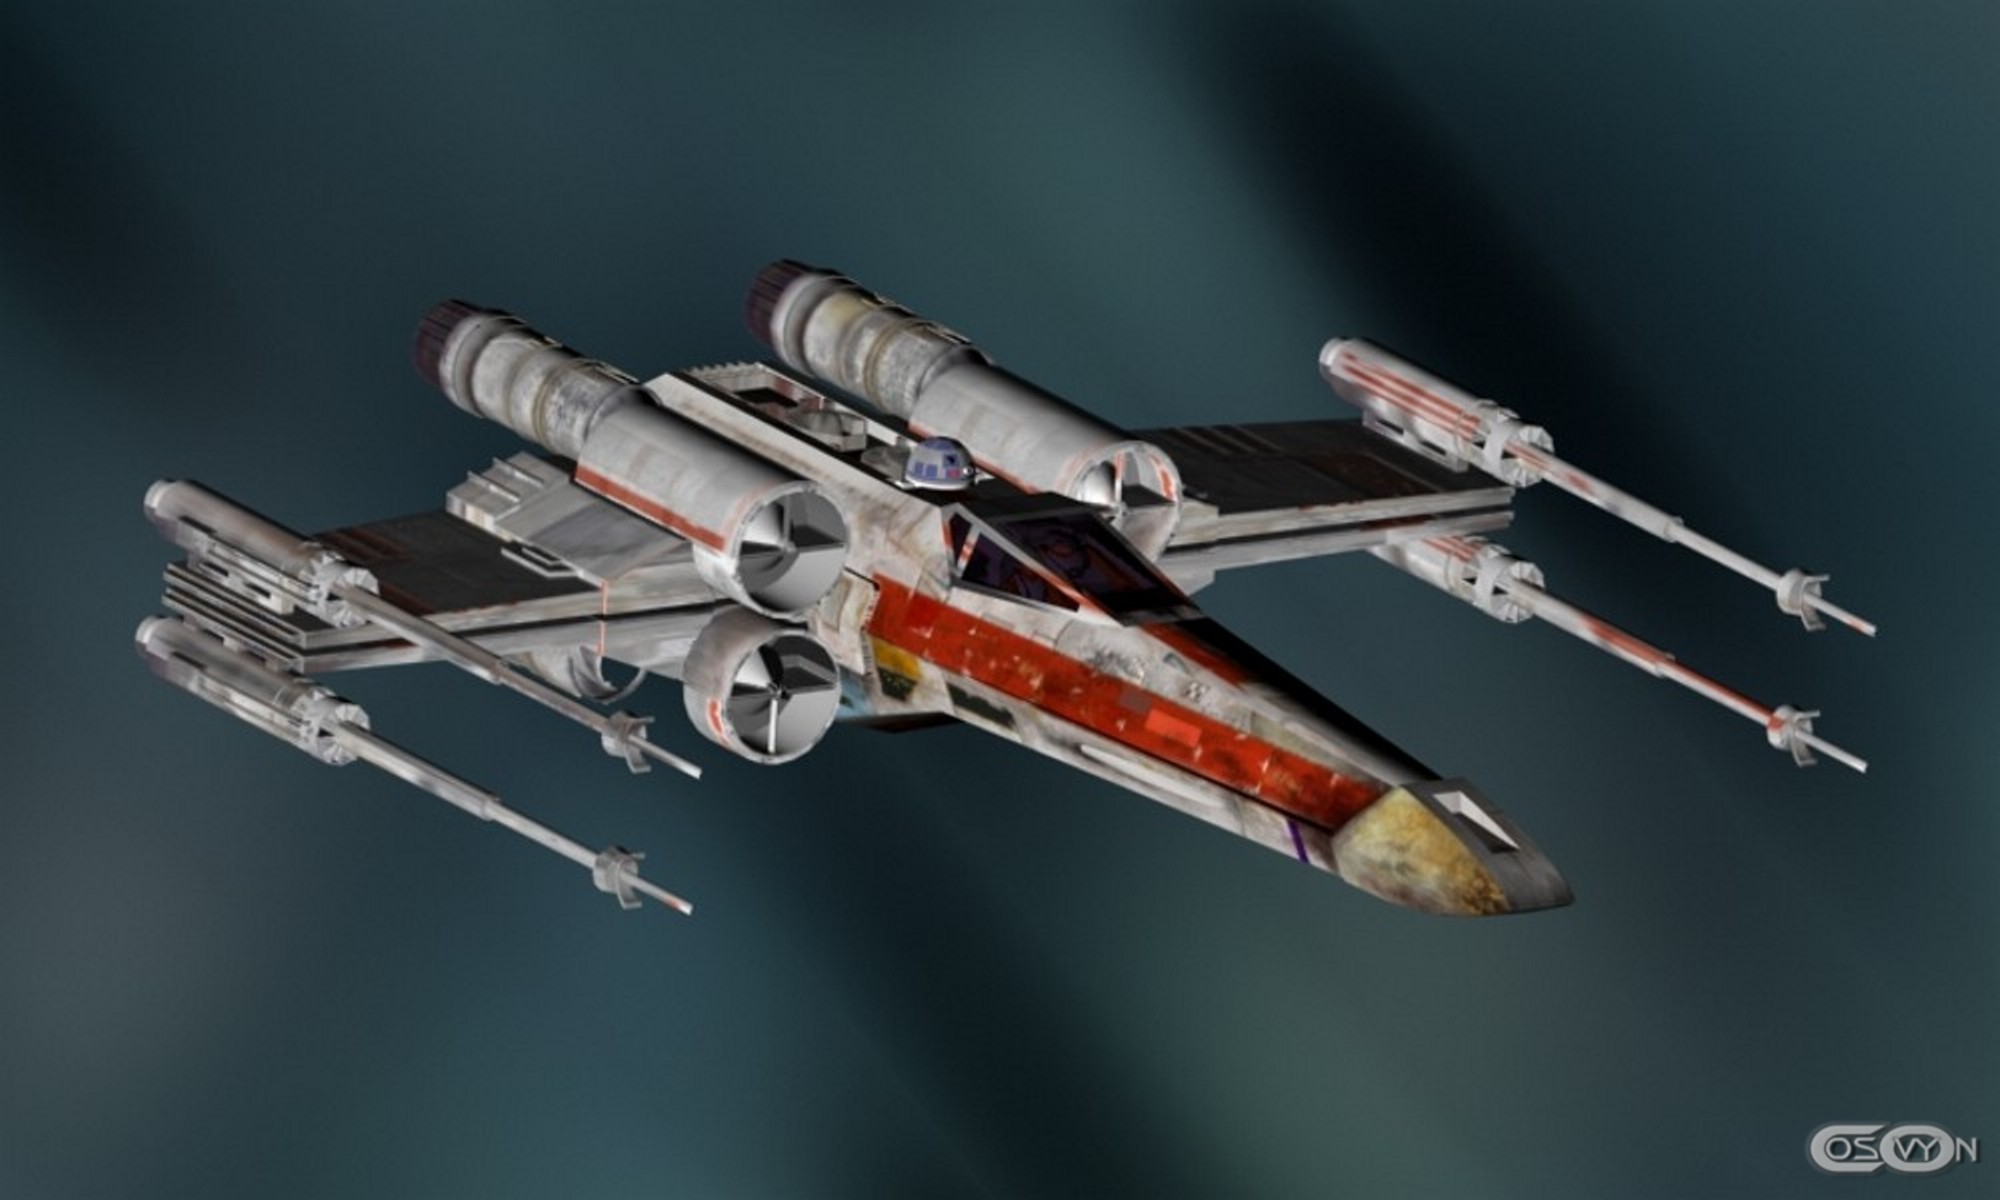 Star Wars, x-wing Fighter - desktop wallpaper